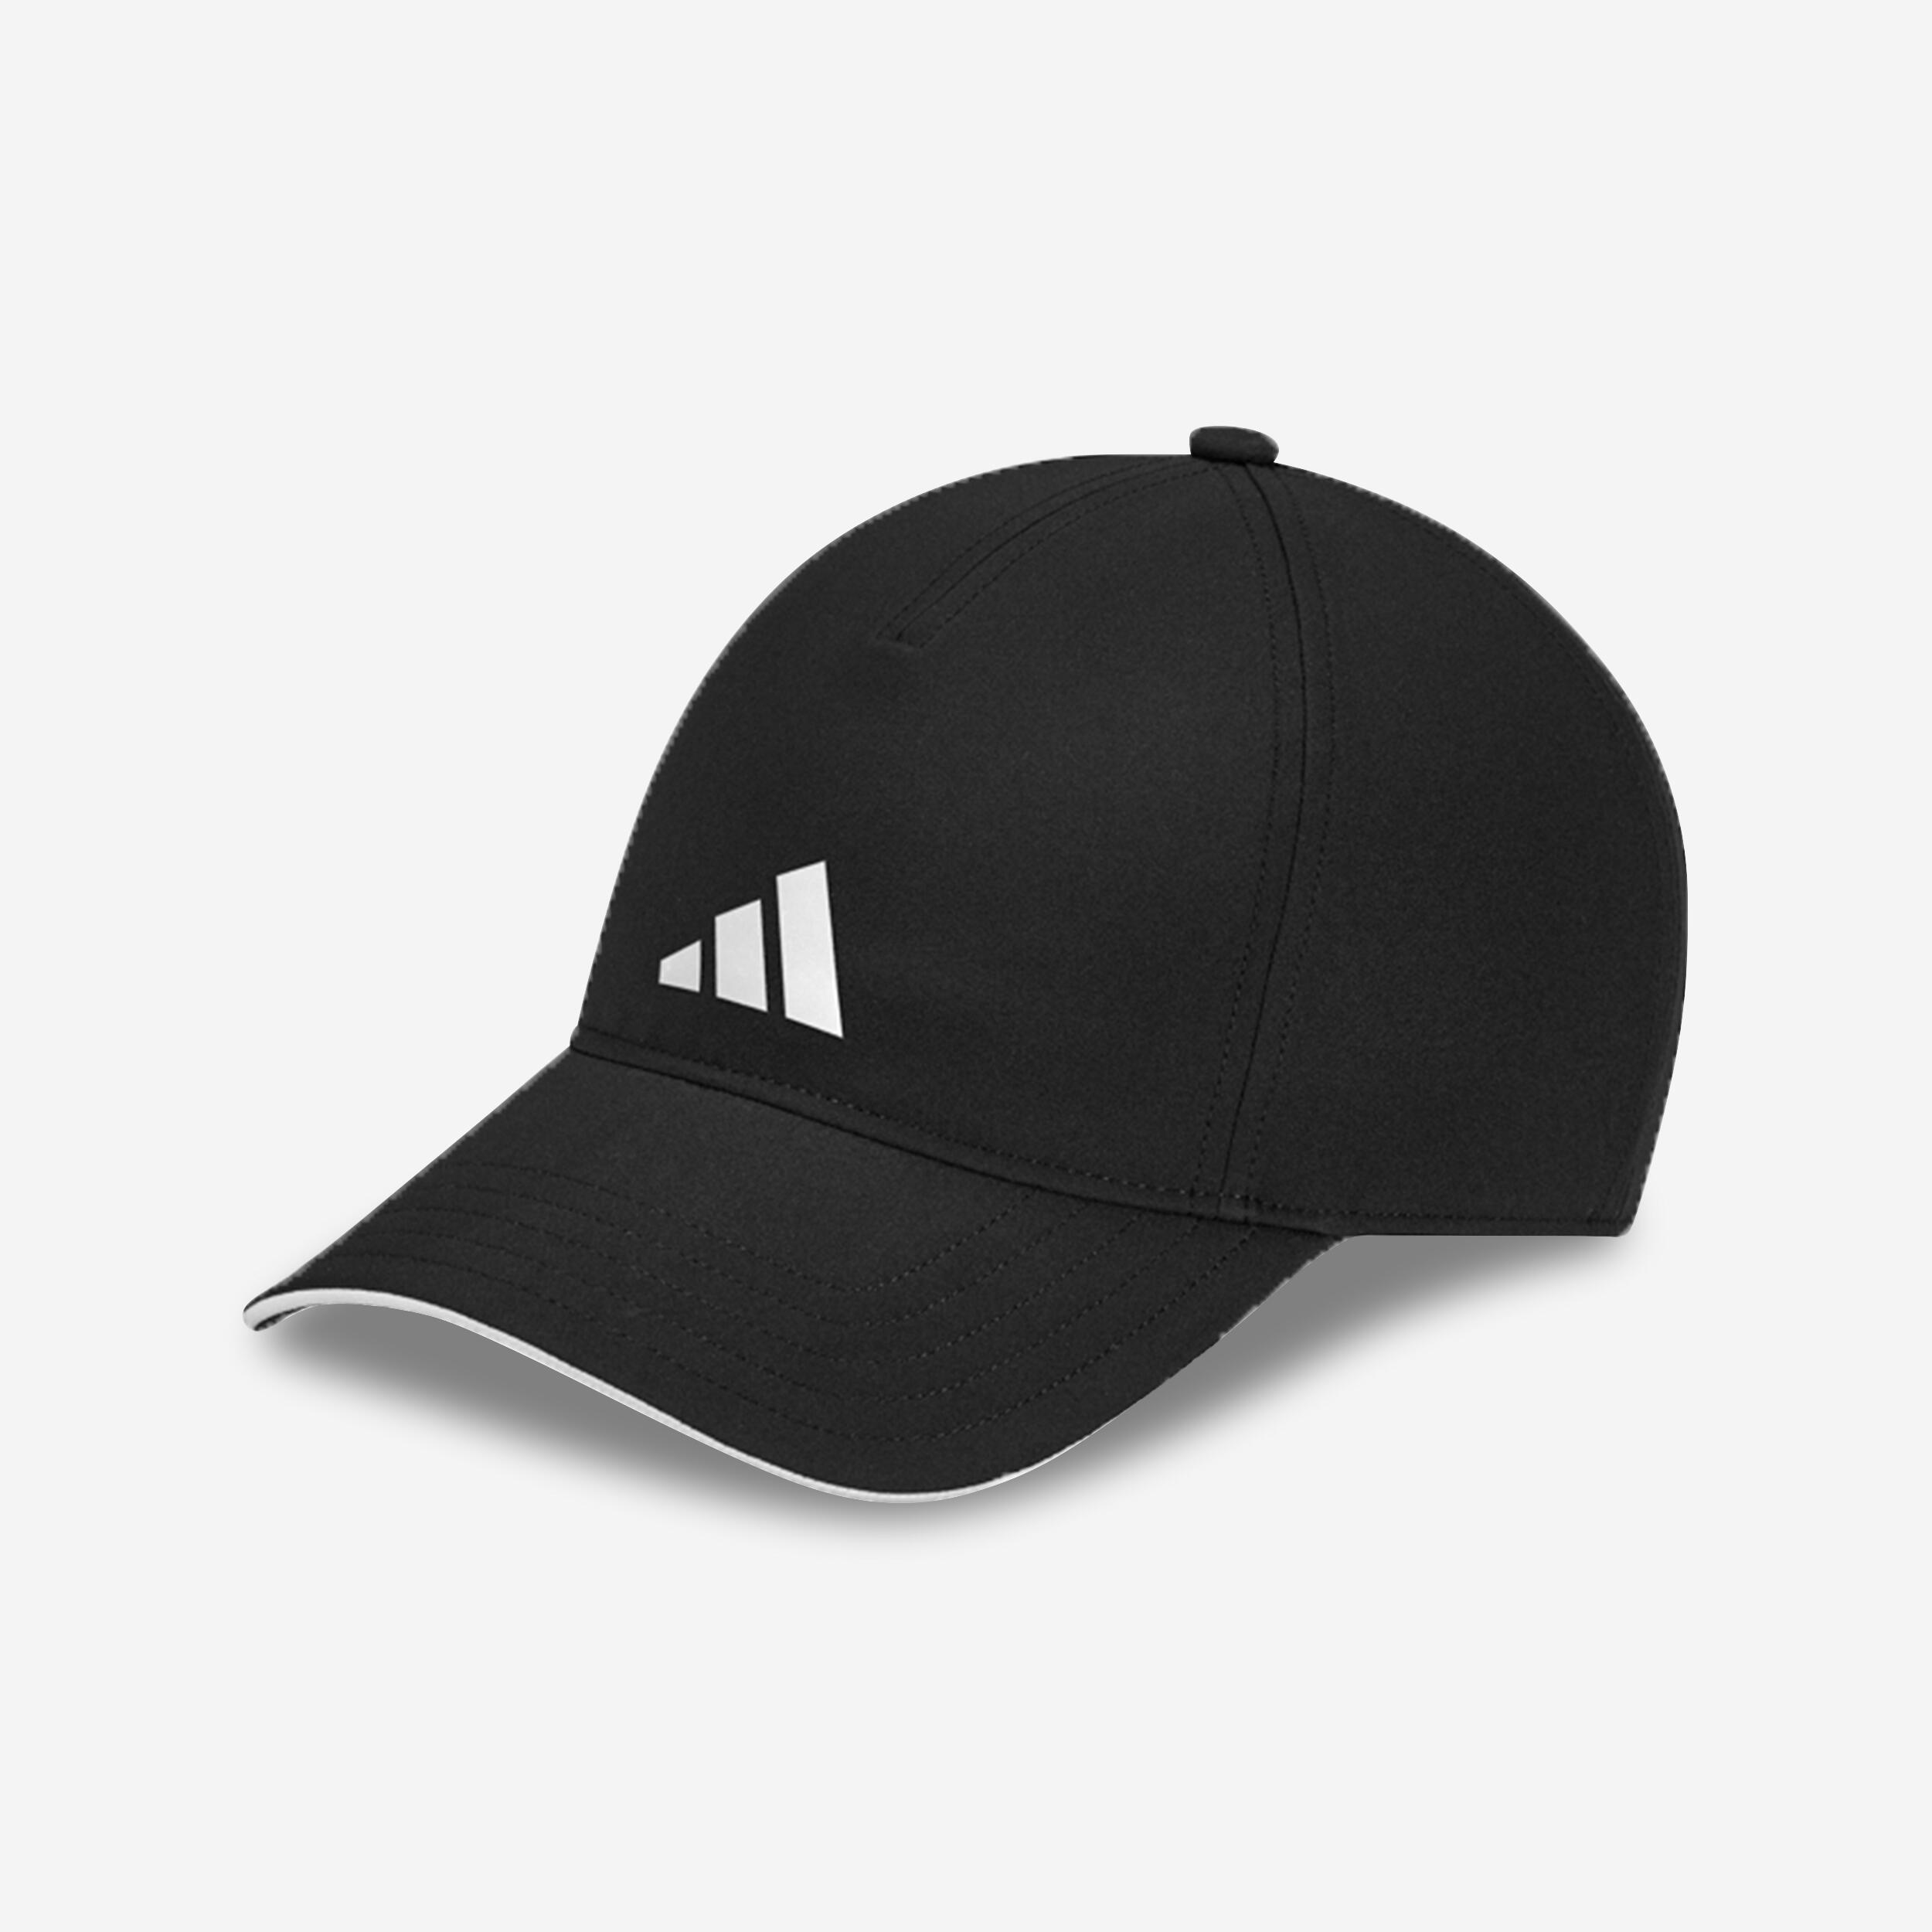 Decathlon | Cappellino adulto Adidas nero T58 |  Adidas